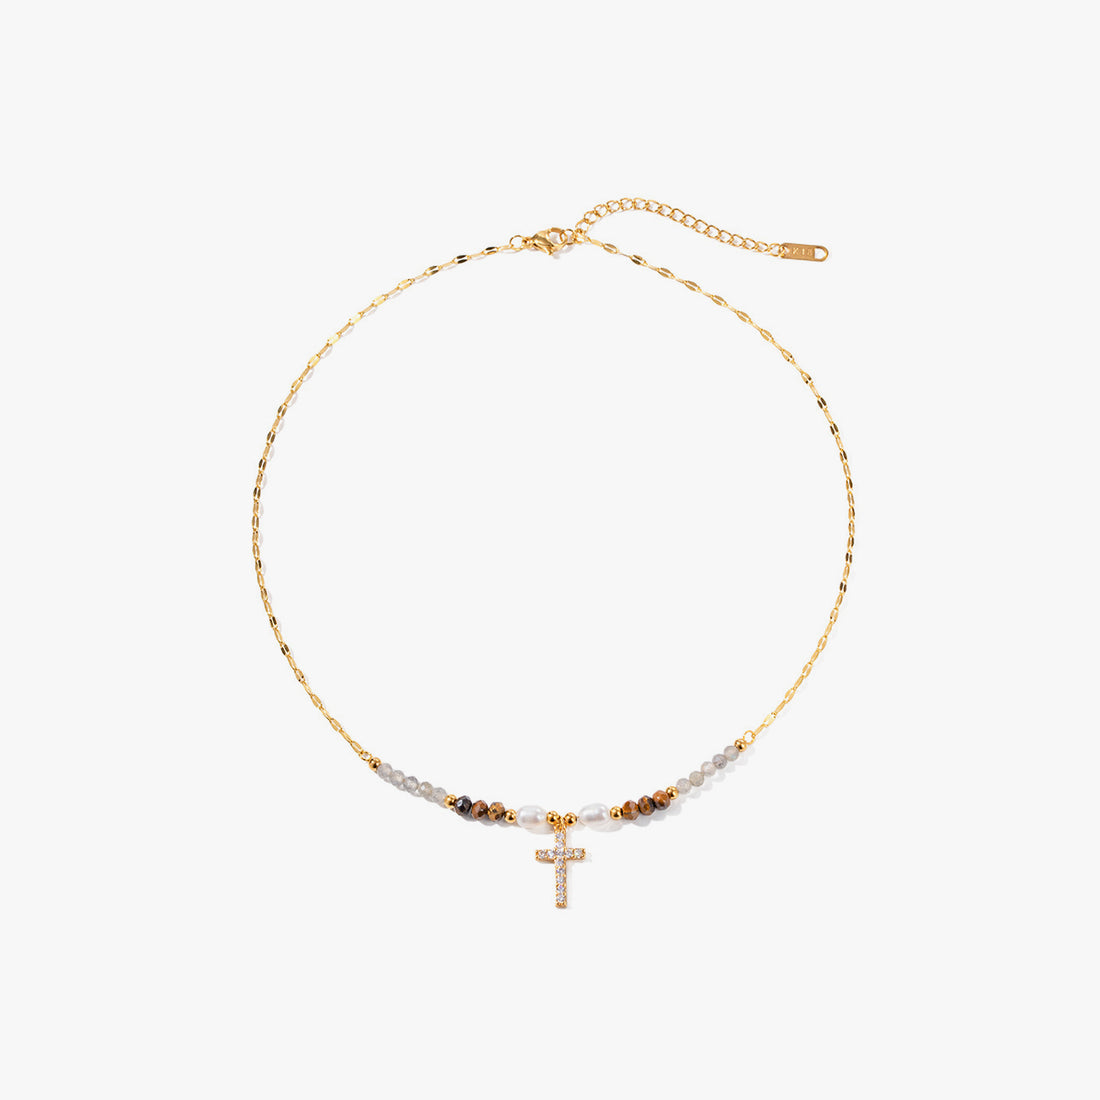 Beaded Cross Necklace